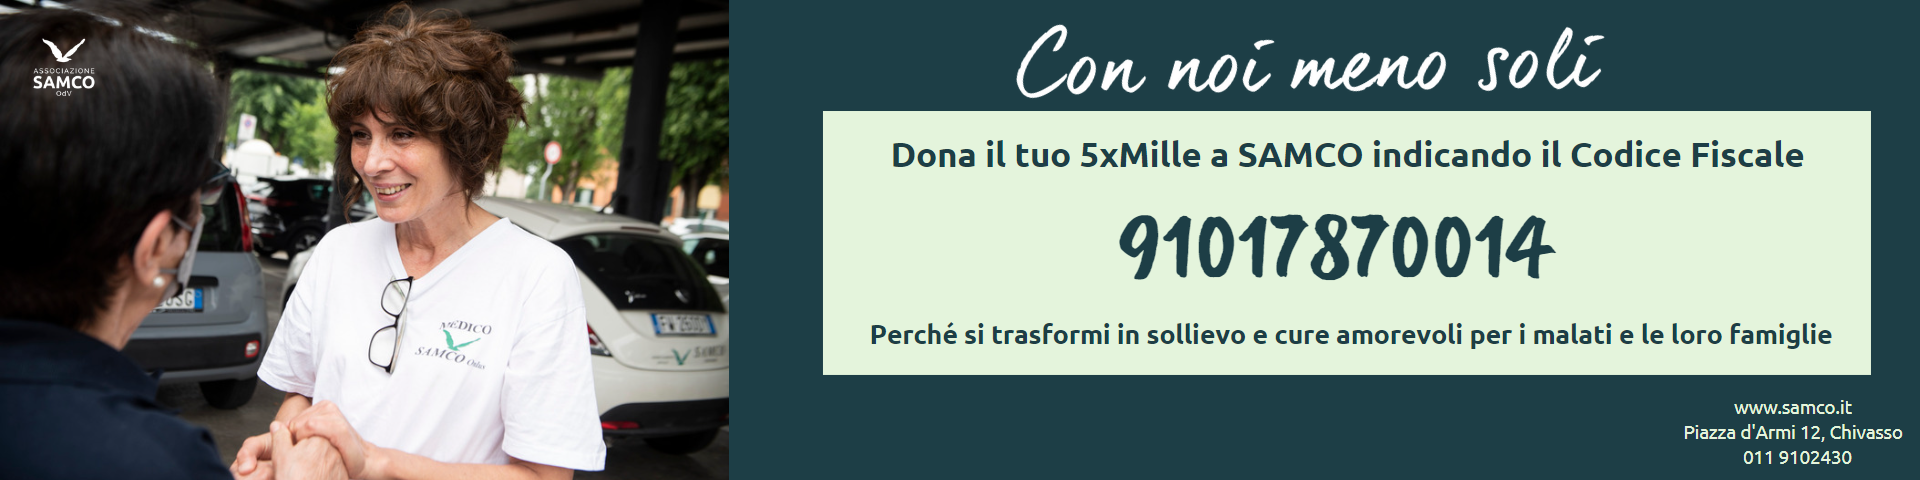 5xMille_Cartolina (1920 × 480 px)